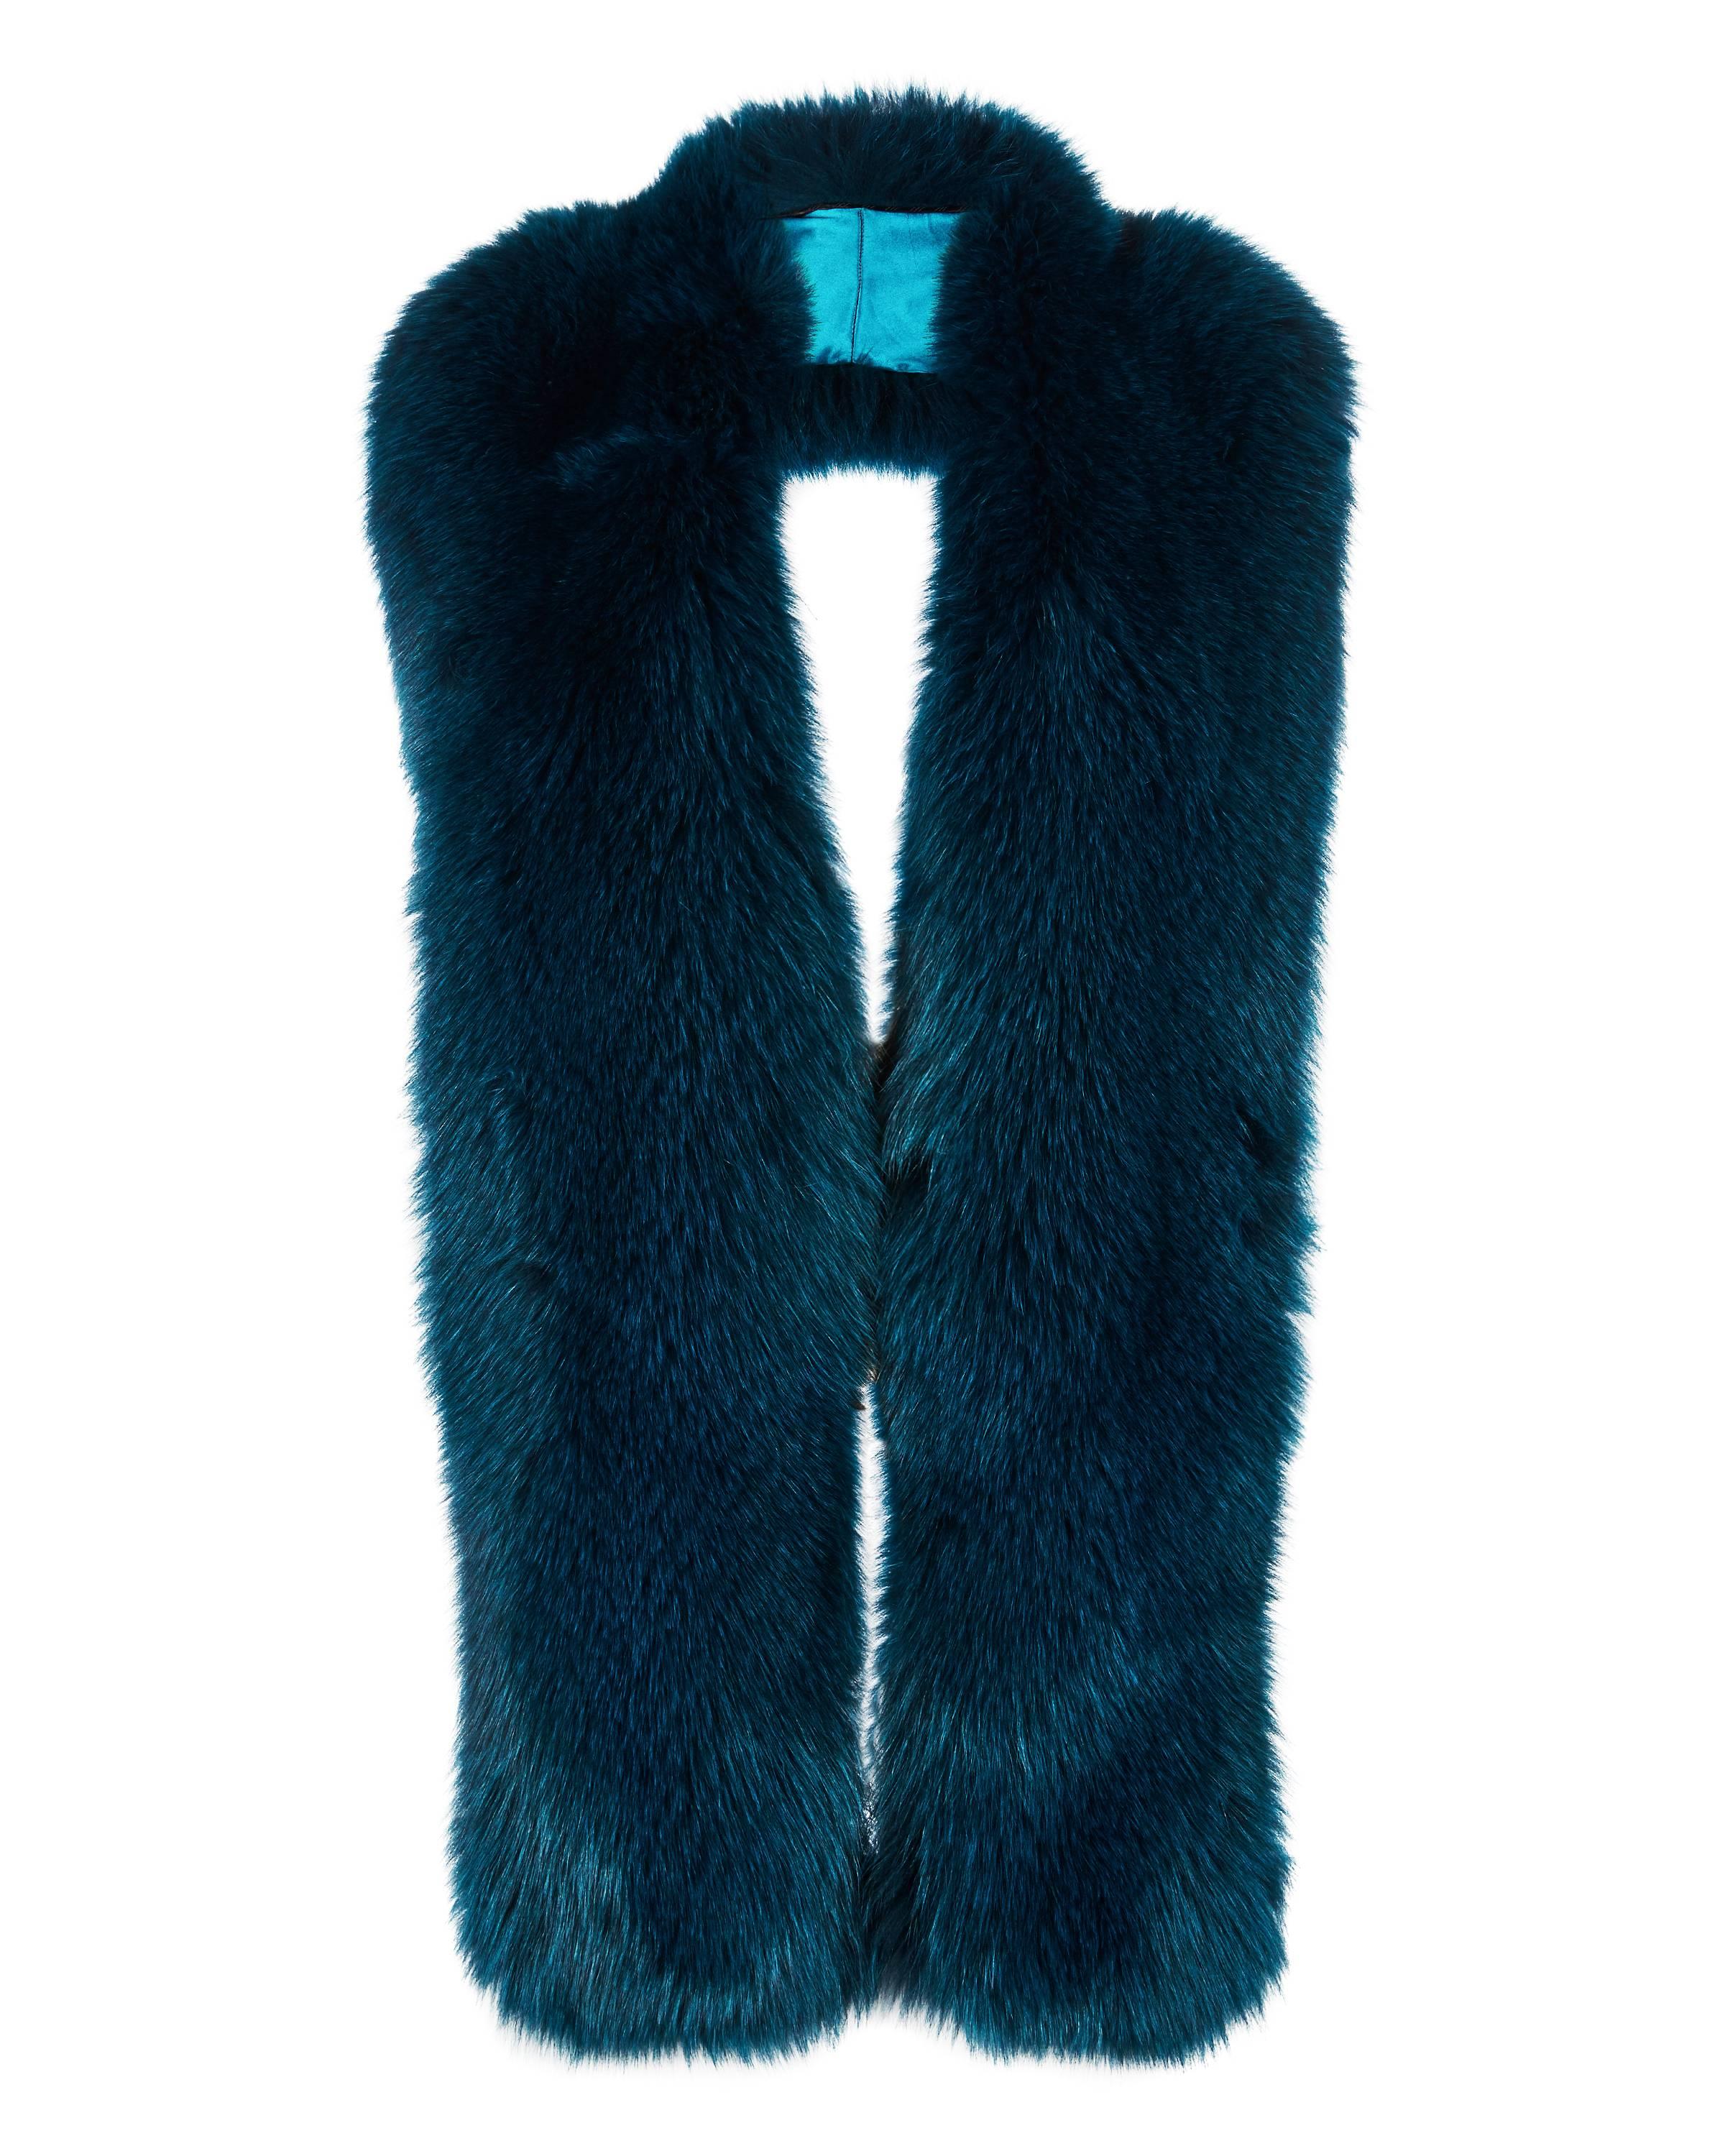 Black Verheyen London Legacy Stole Collar in Jade Fox Fur & Silk Lining - Brand New 